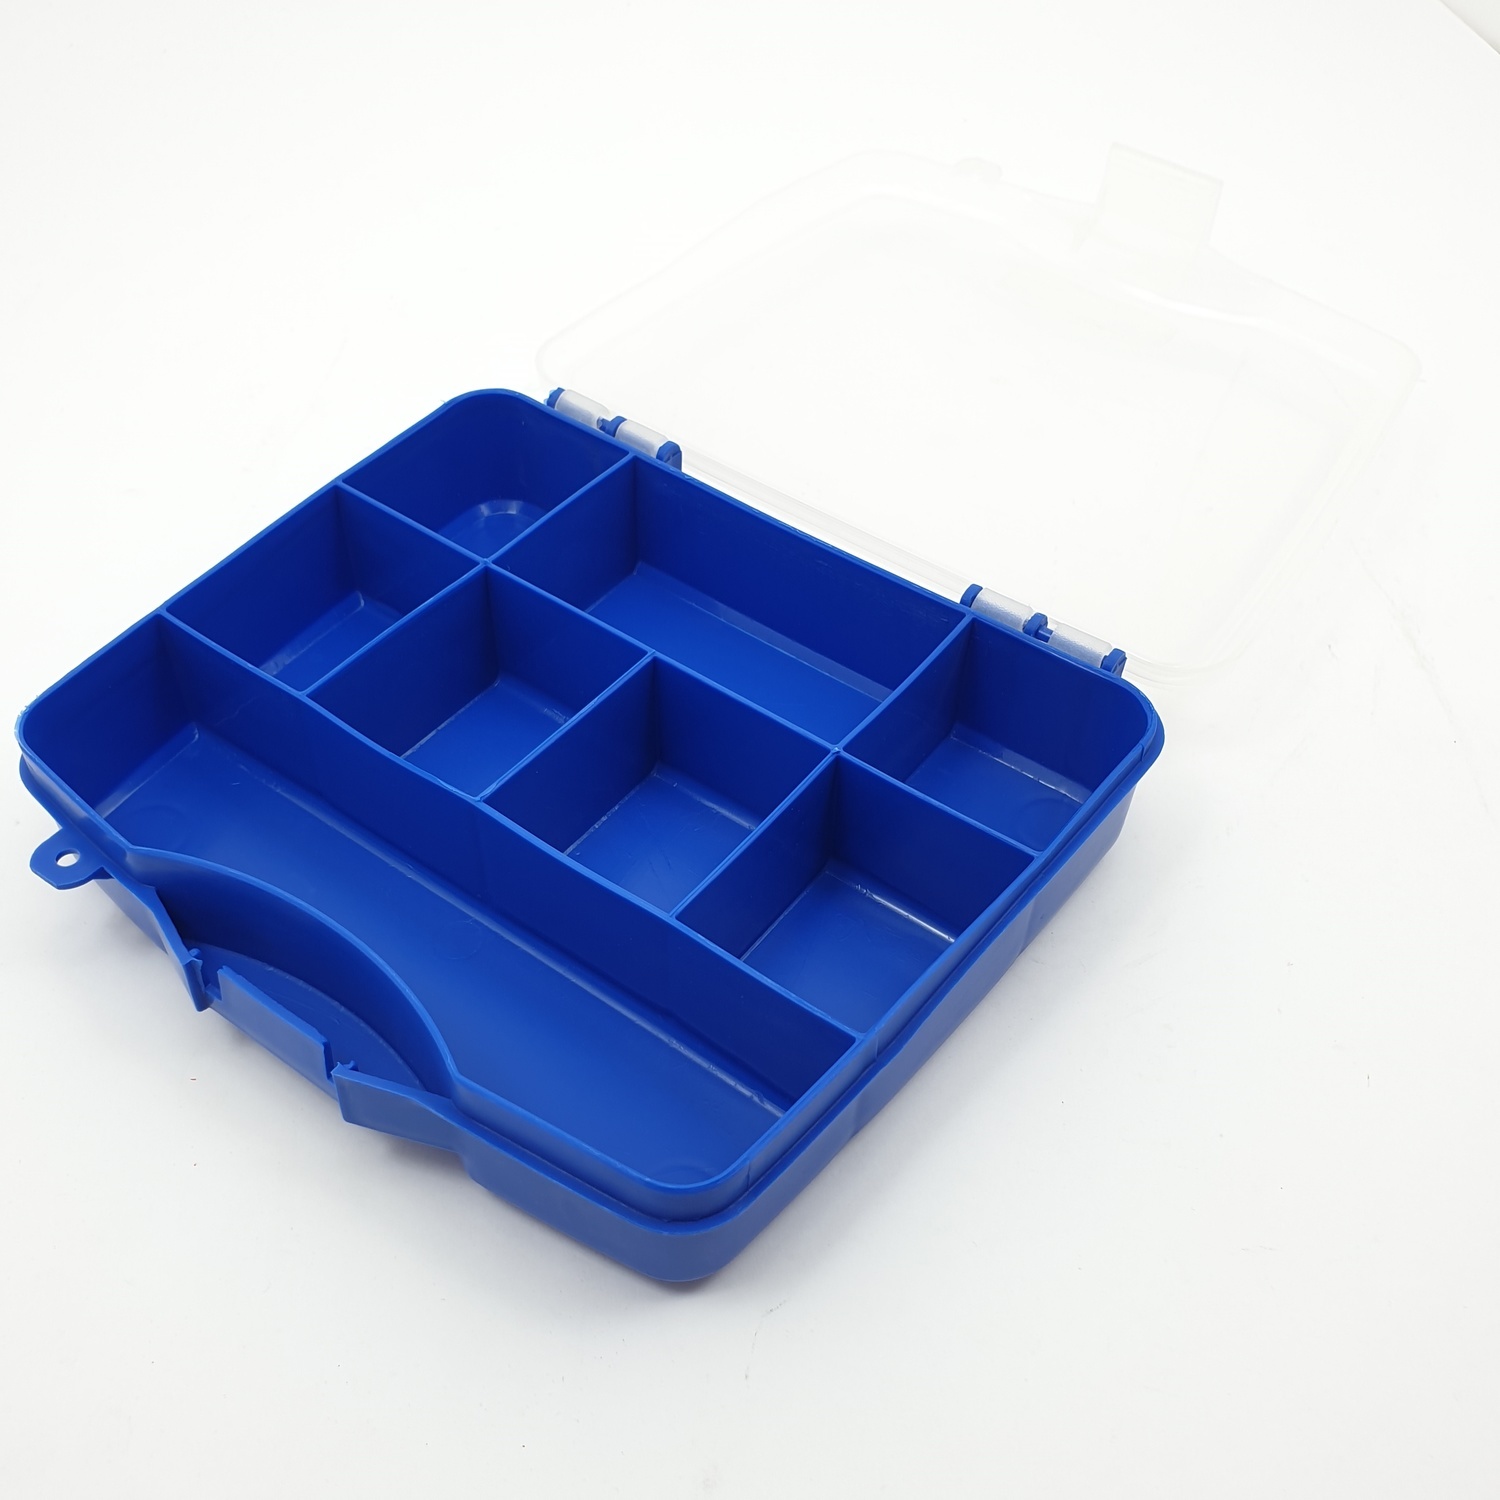 PORT-BAG กล่องเครื่องมือช่าง (8ช่อง) รุ่น OR06 BLUE สีฟ้า